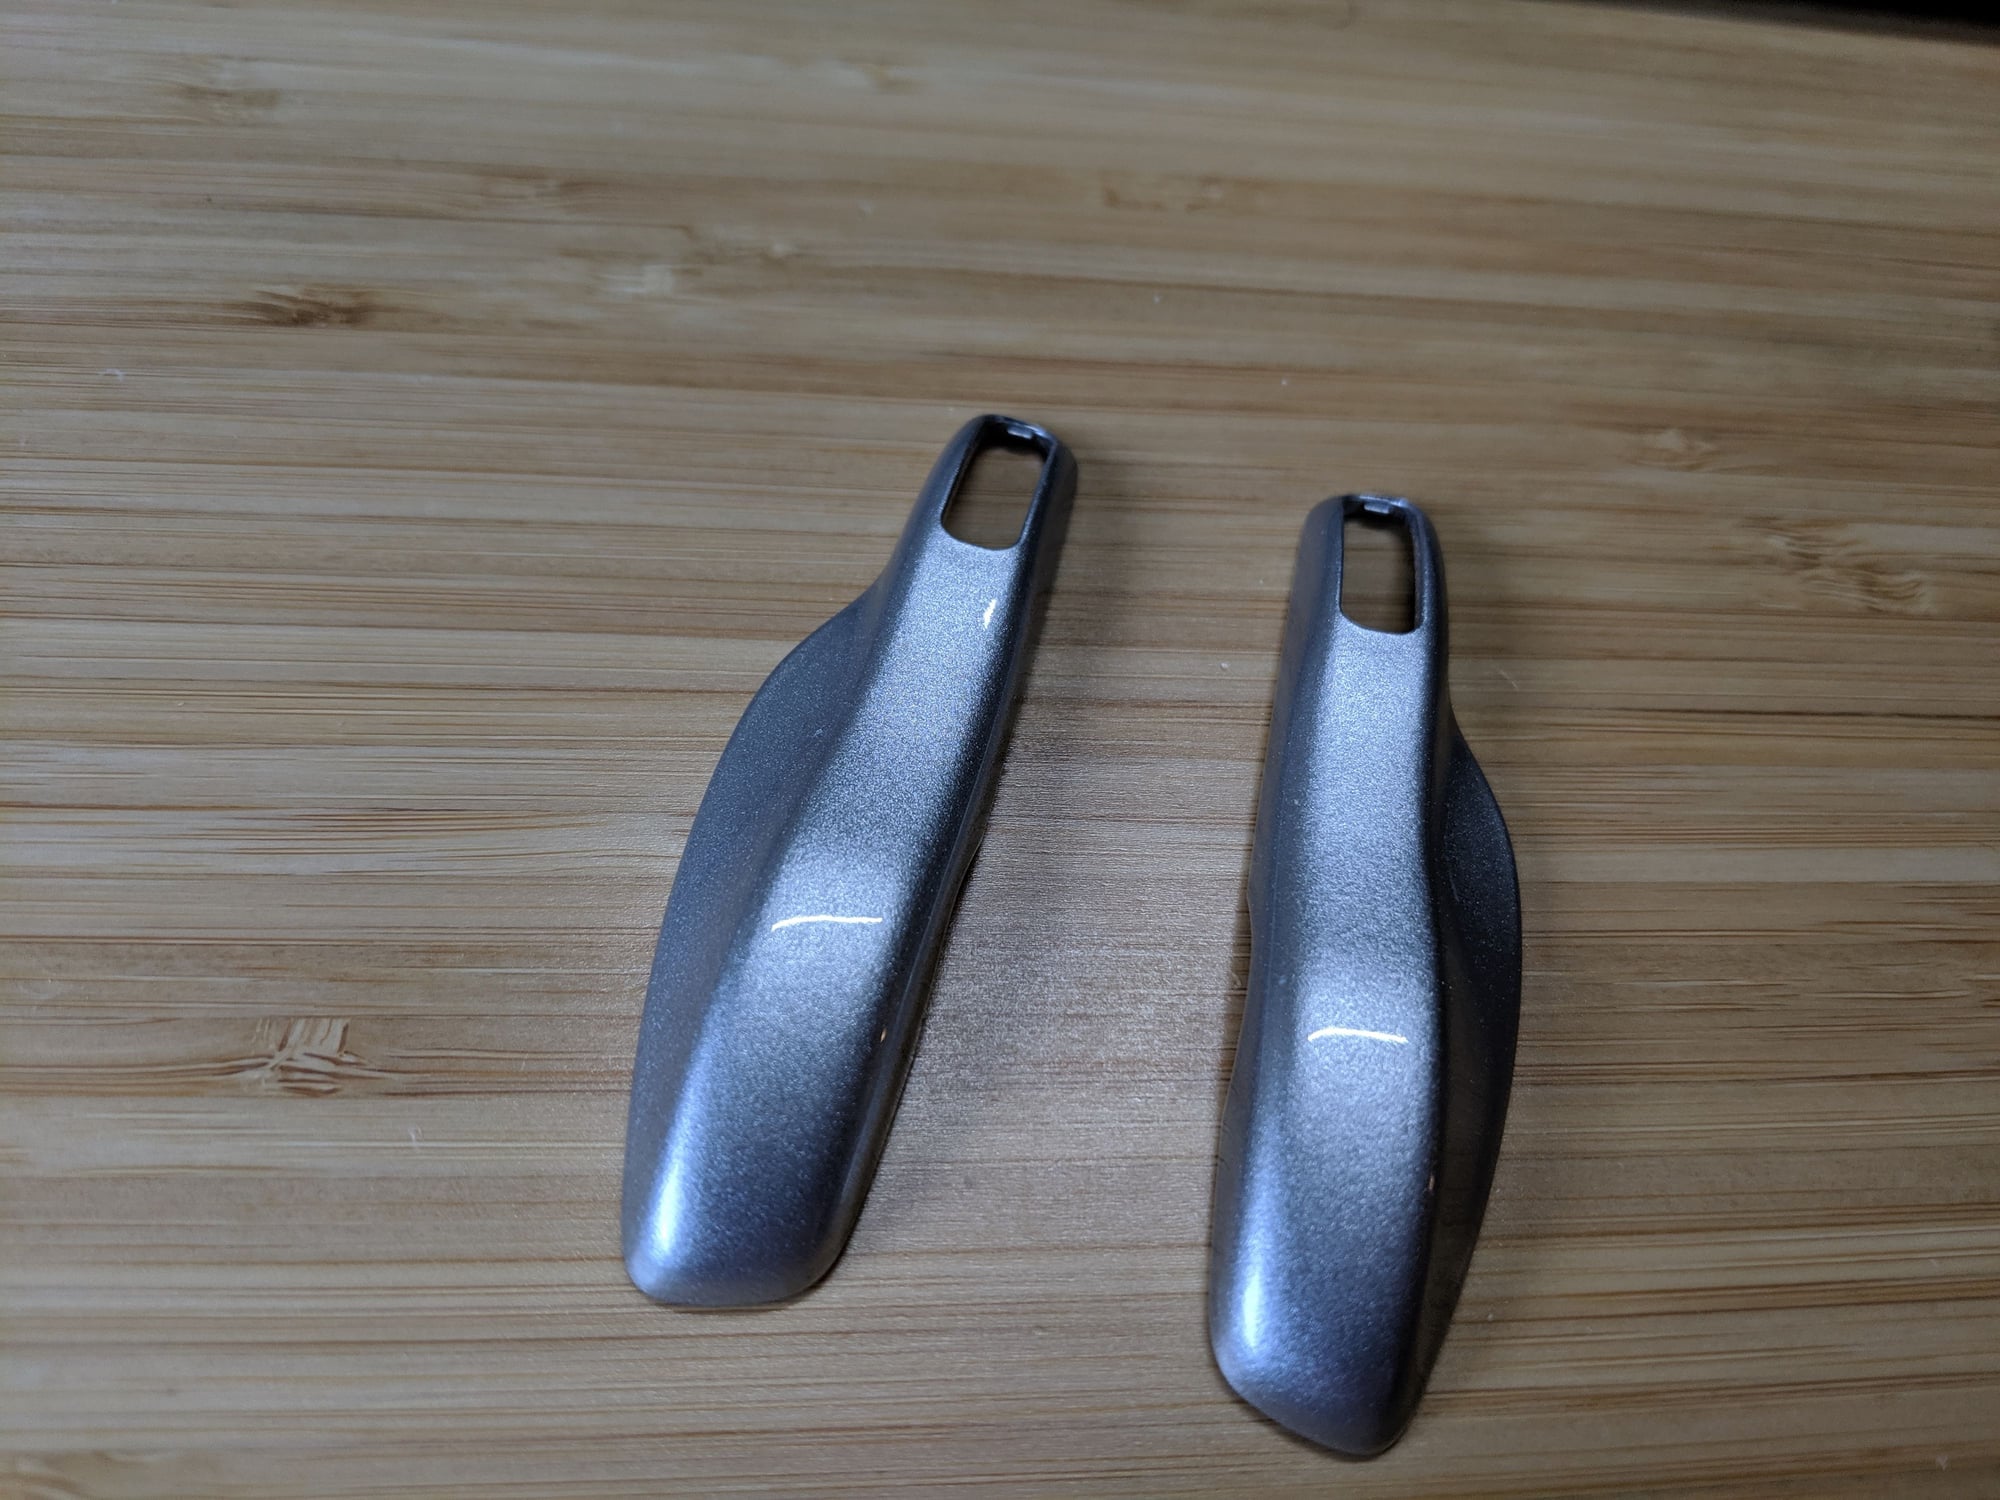 Accessories - Rhodium silver key trim - Used - Gardena, CA 90249, United States